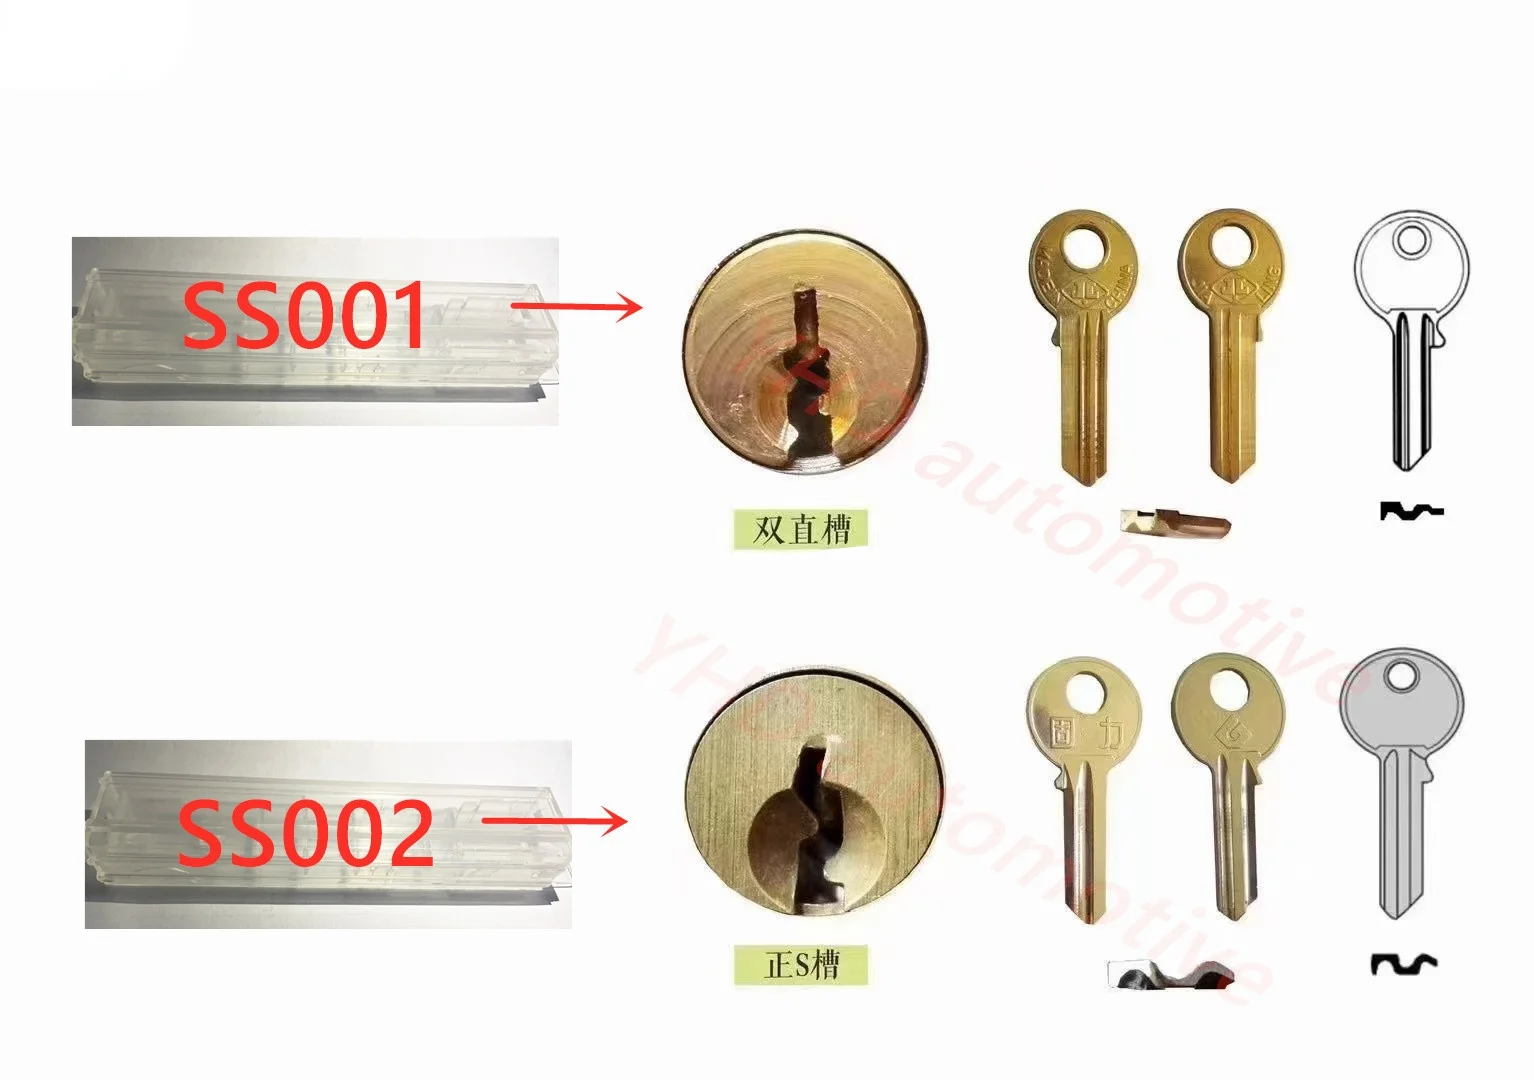 

Lishi 2 in 1 2in1 tool LW4 LW5 TE2 S123 KW1 KW5 SC1 SC4 SS001 SS002 R52 M1/ MS2 Locksmith Tools for Home Door Civil Locks